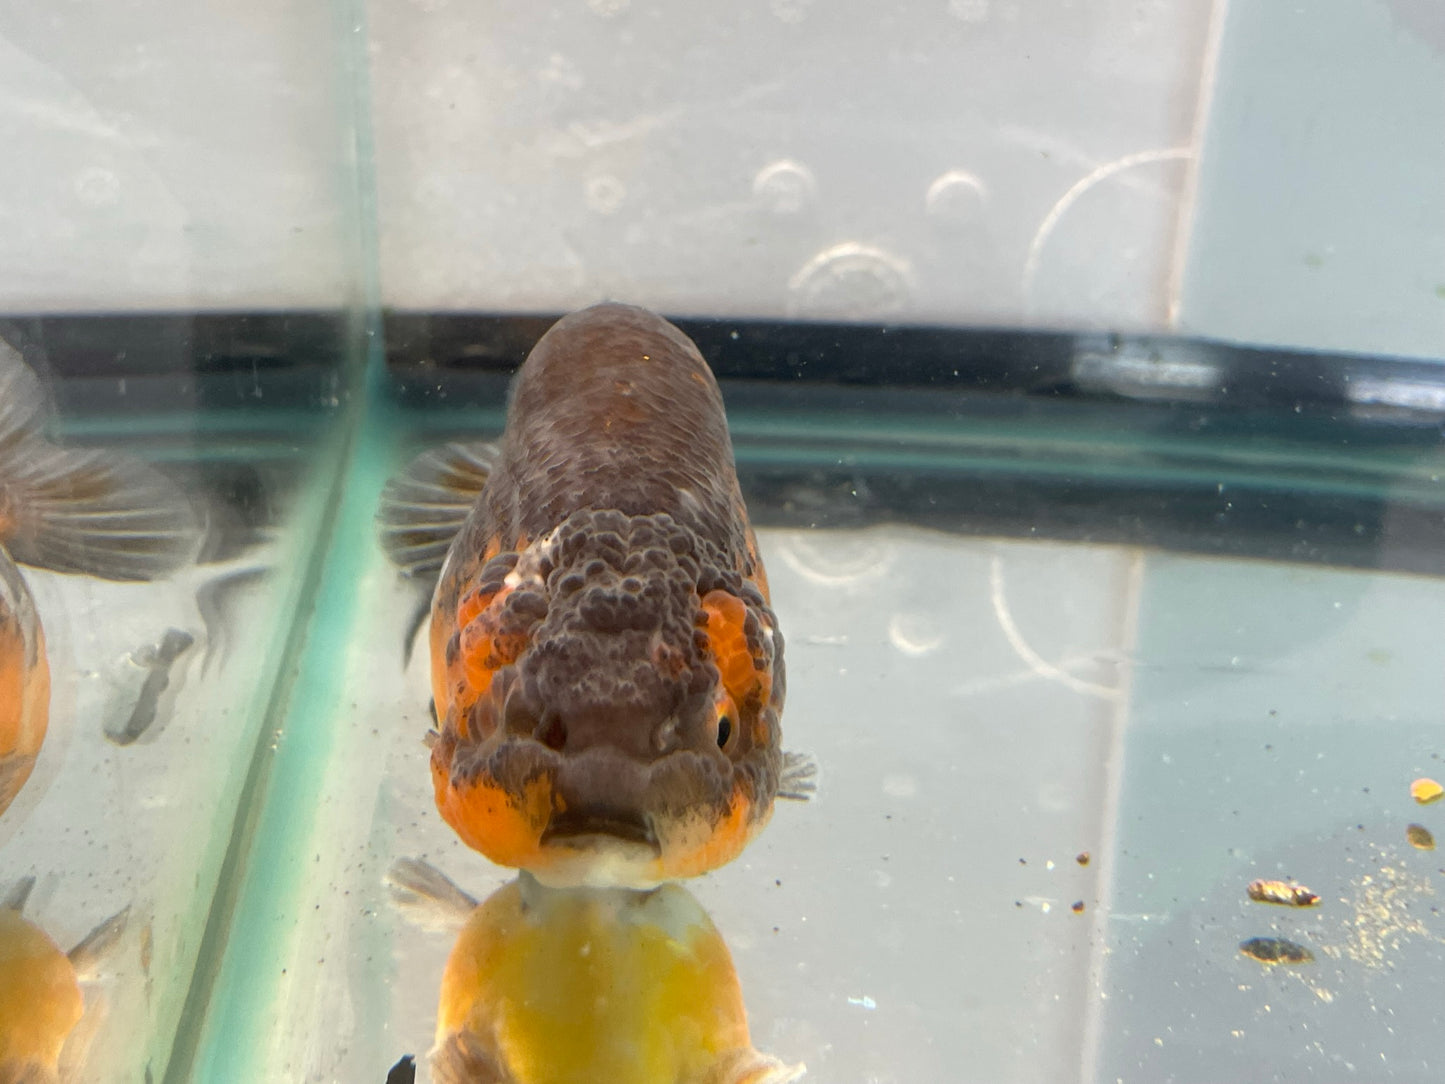 Calico Ranchu 10-11cm Fancy Goldfish Fish in Photo #2